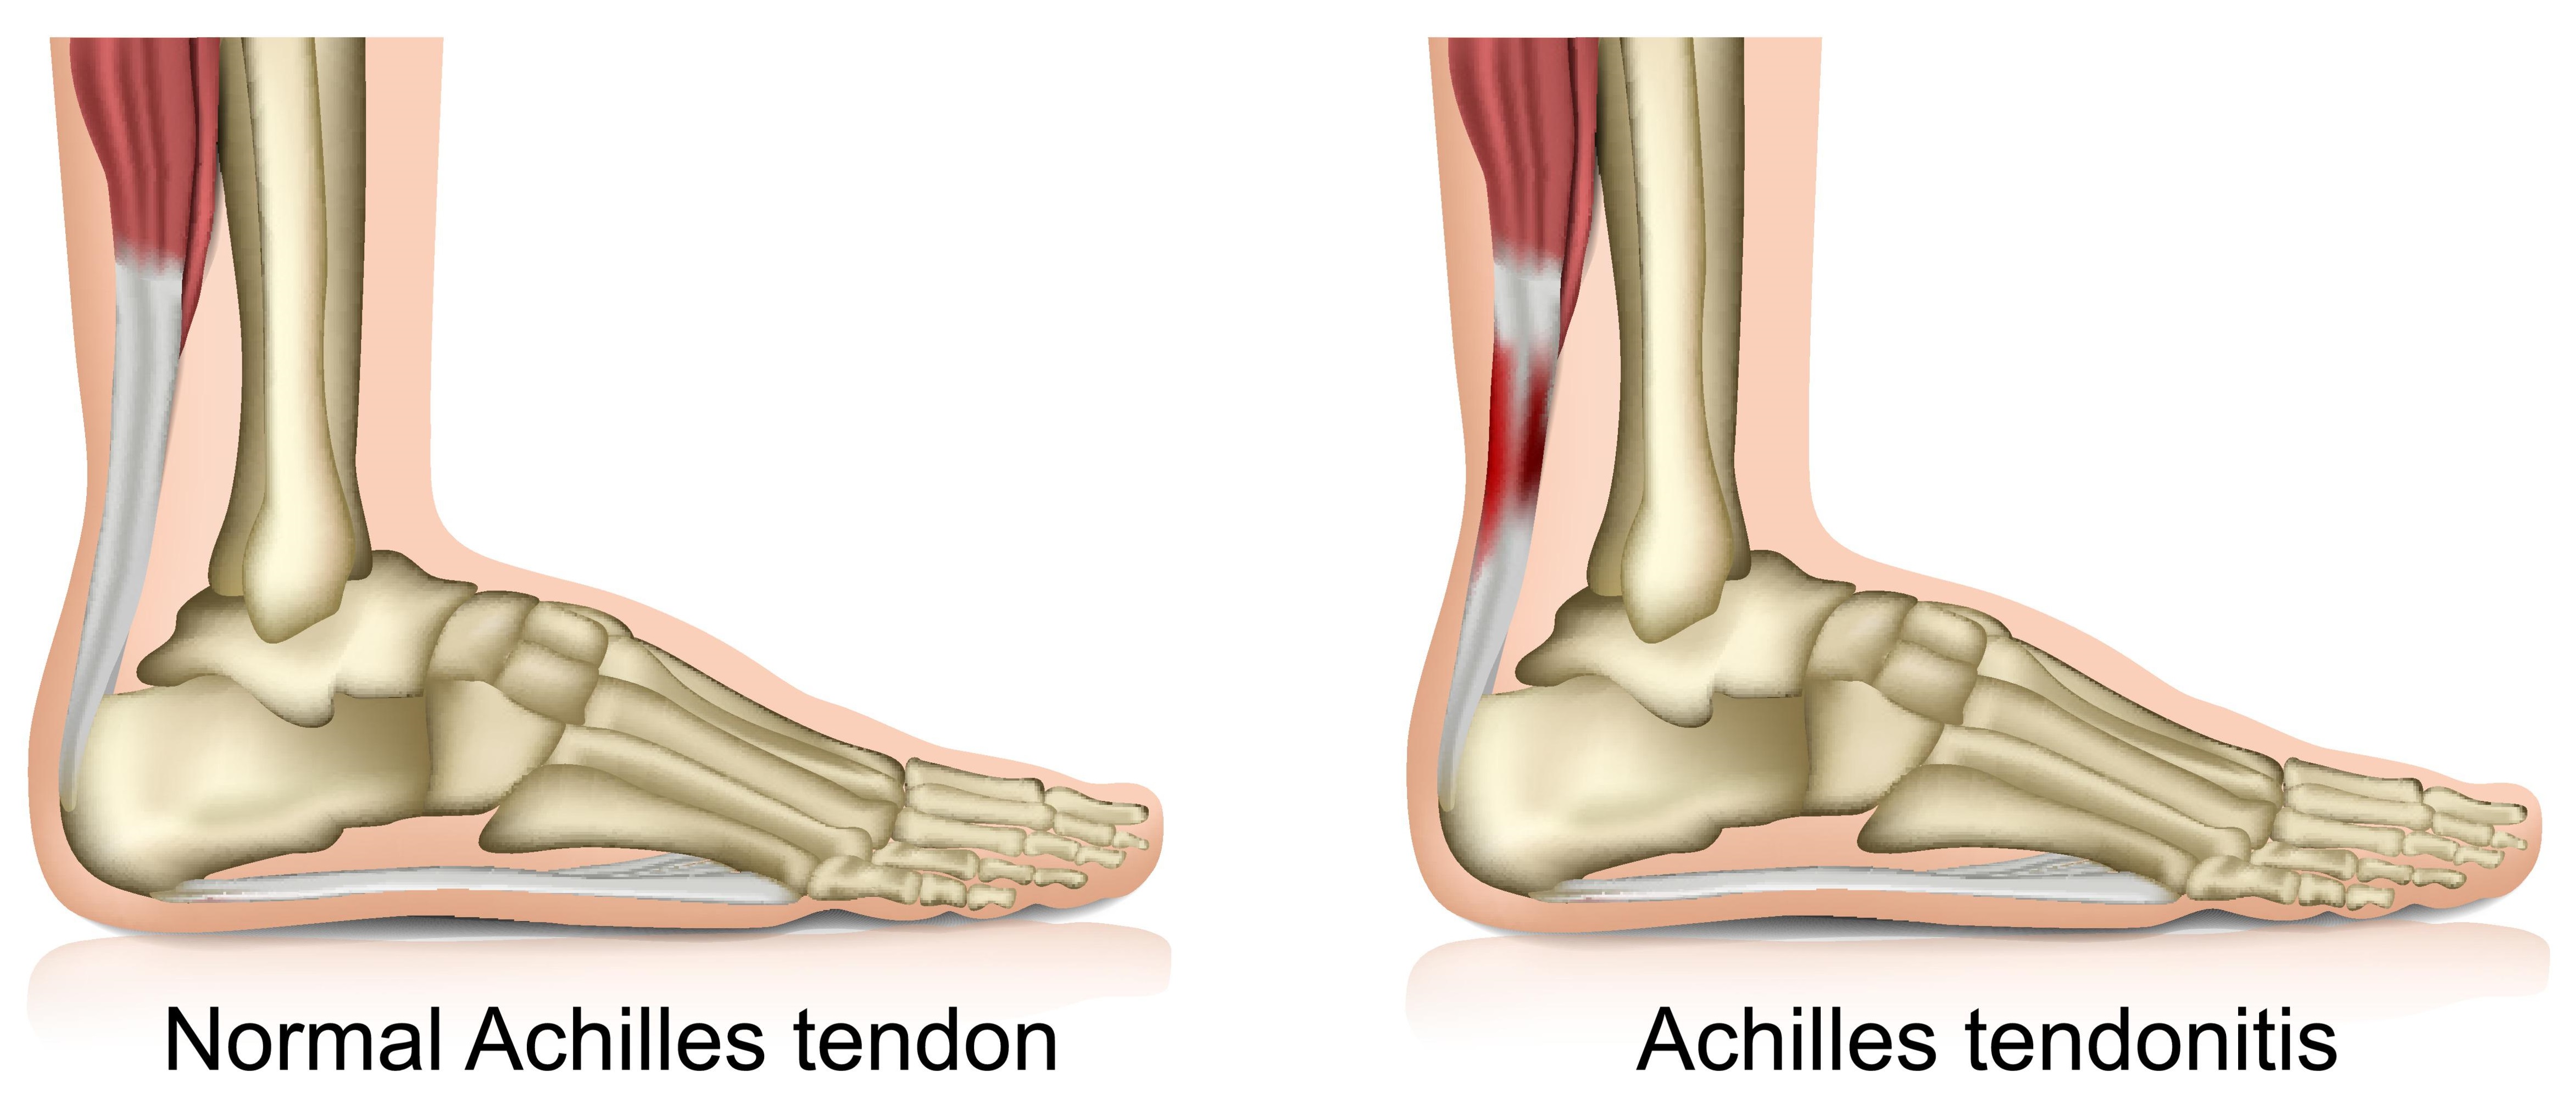 Achilles Tendonitis Tendinopathy Southern Cross Nz